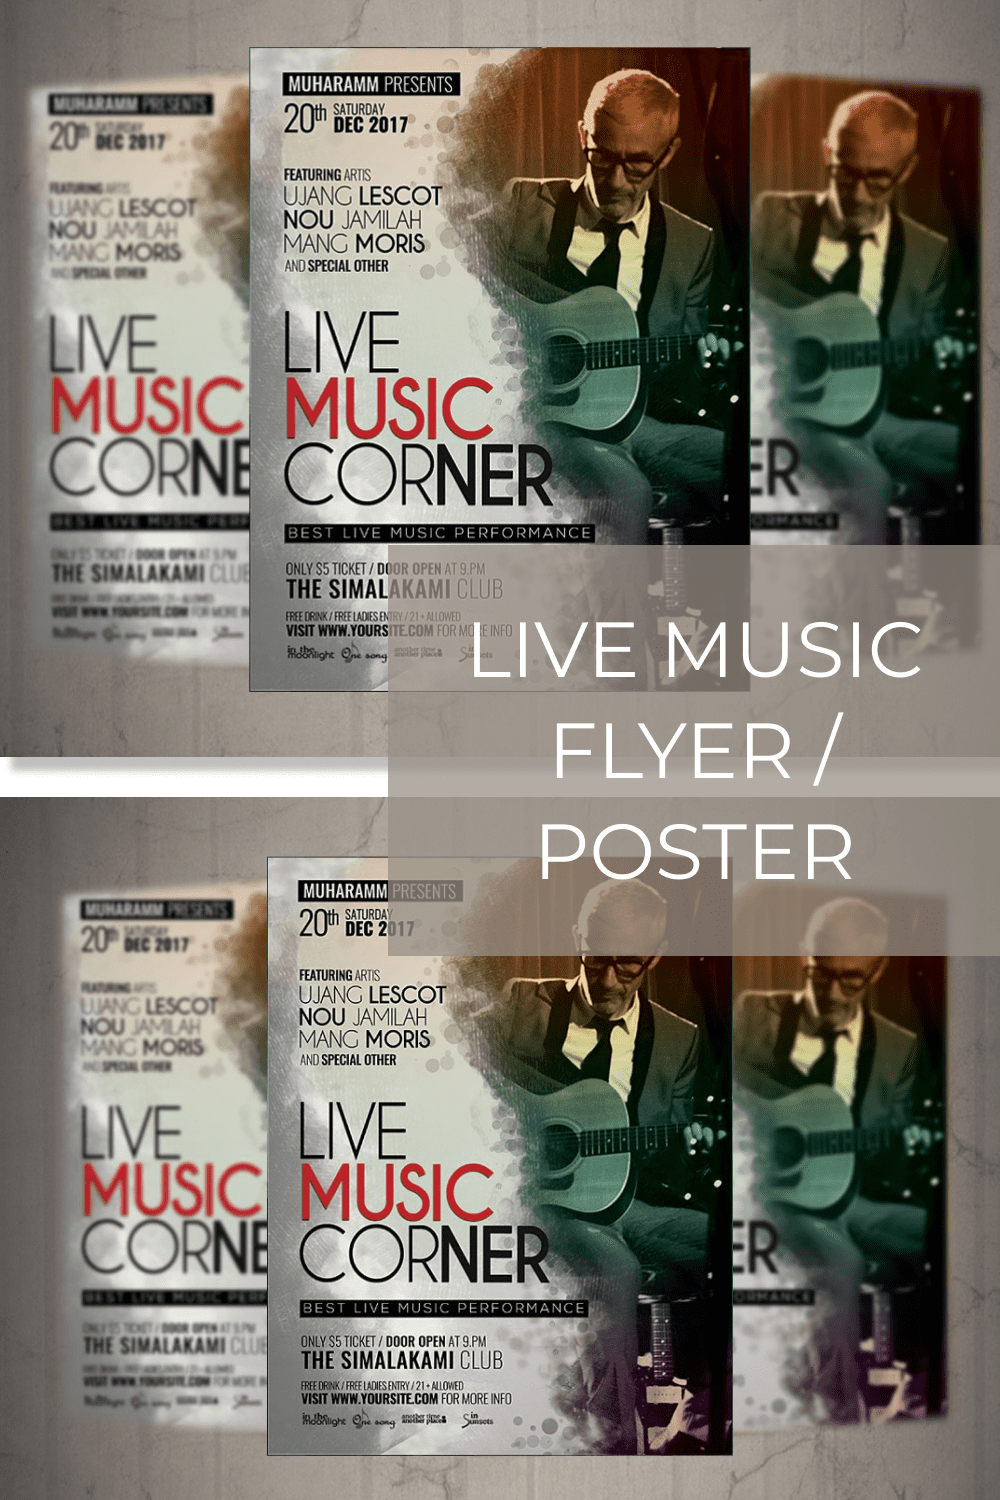 Live Music Flyer Poster pinterest image.